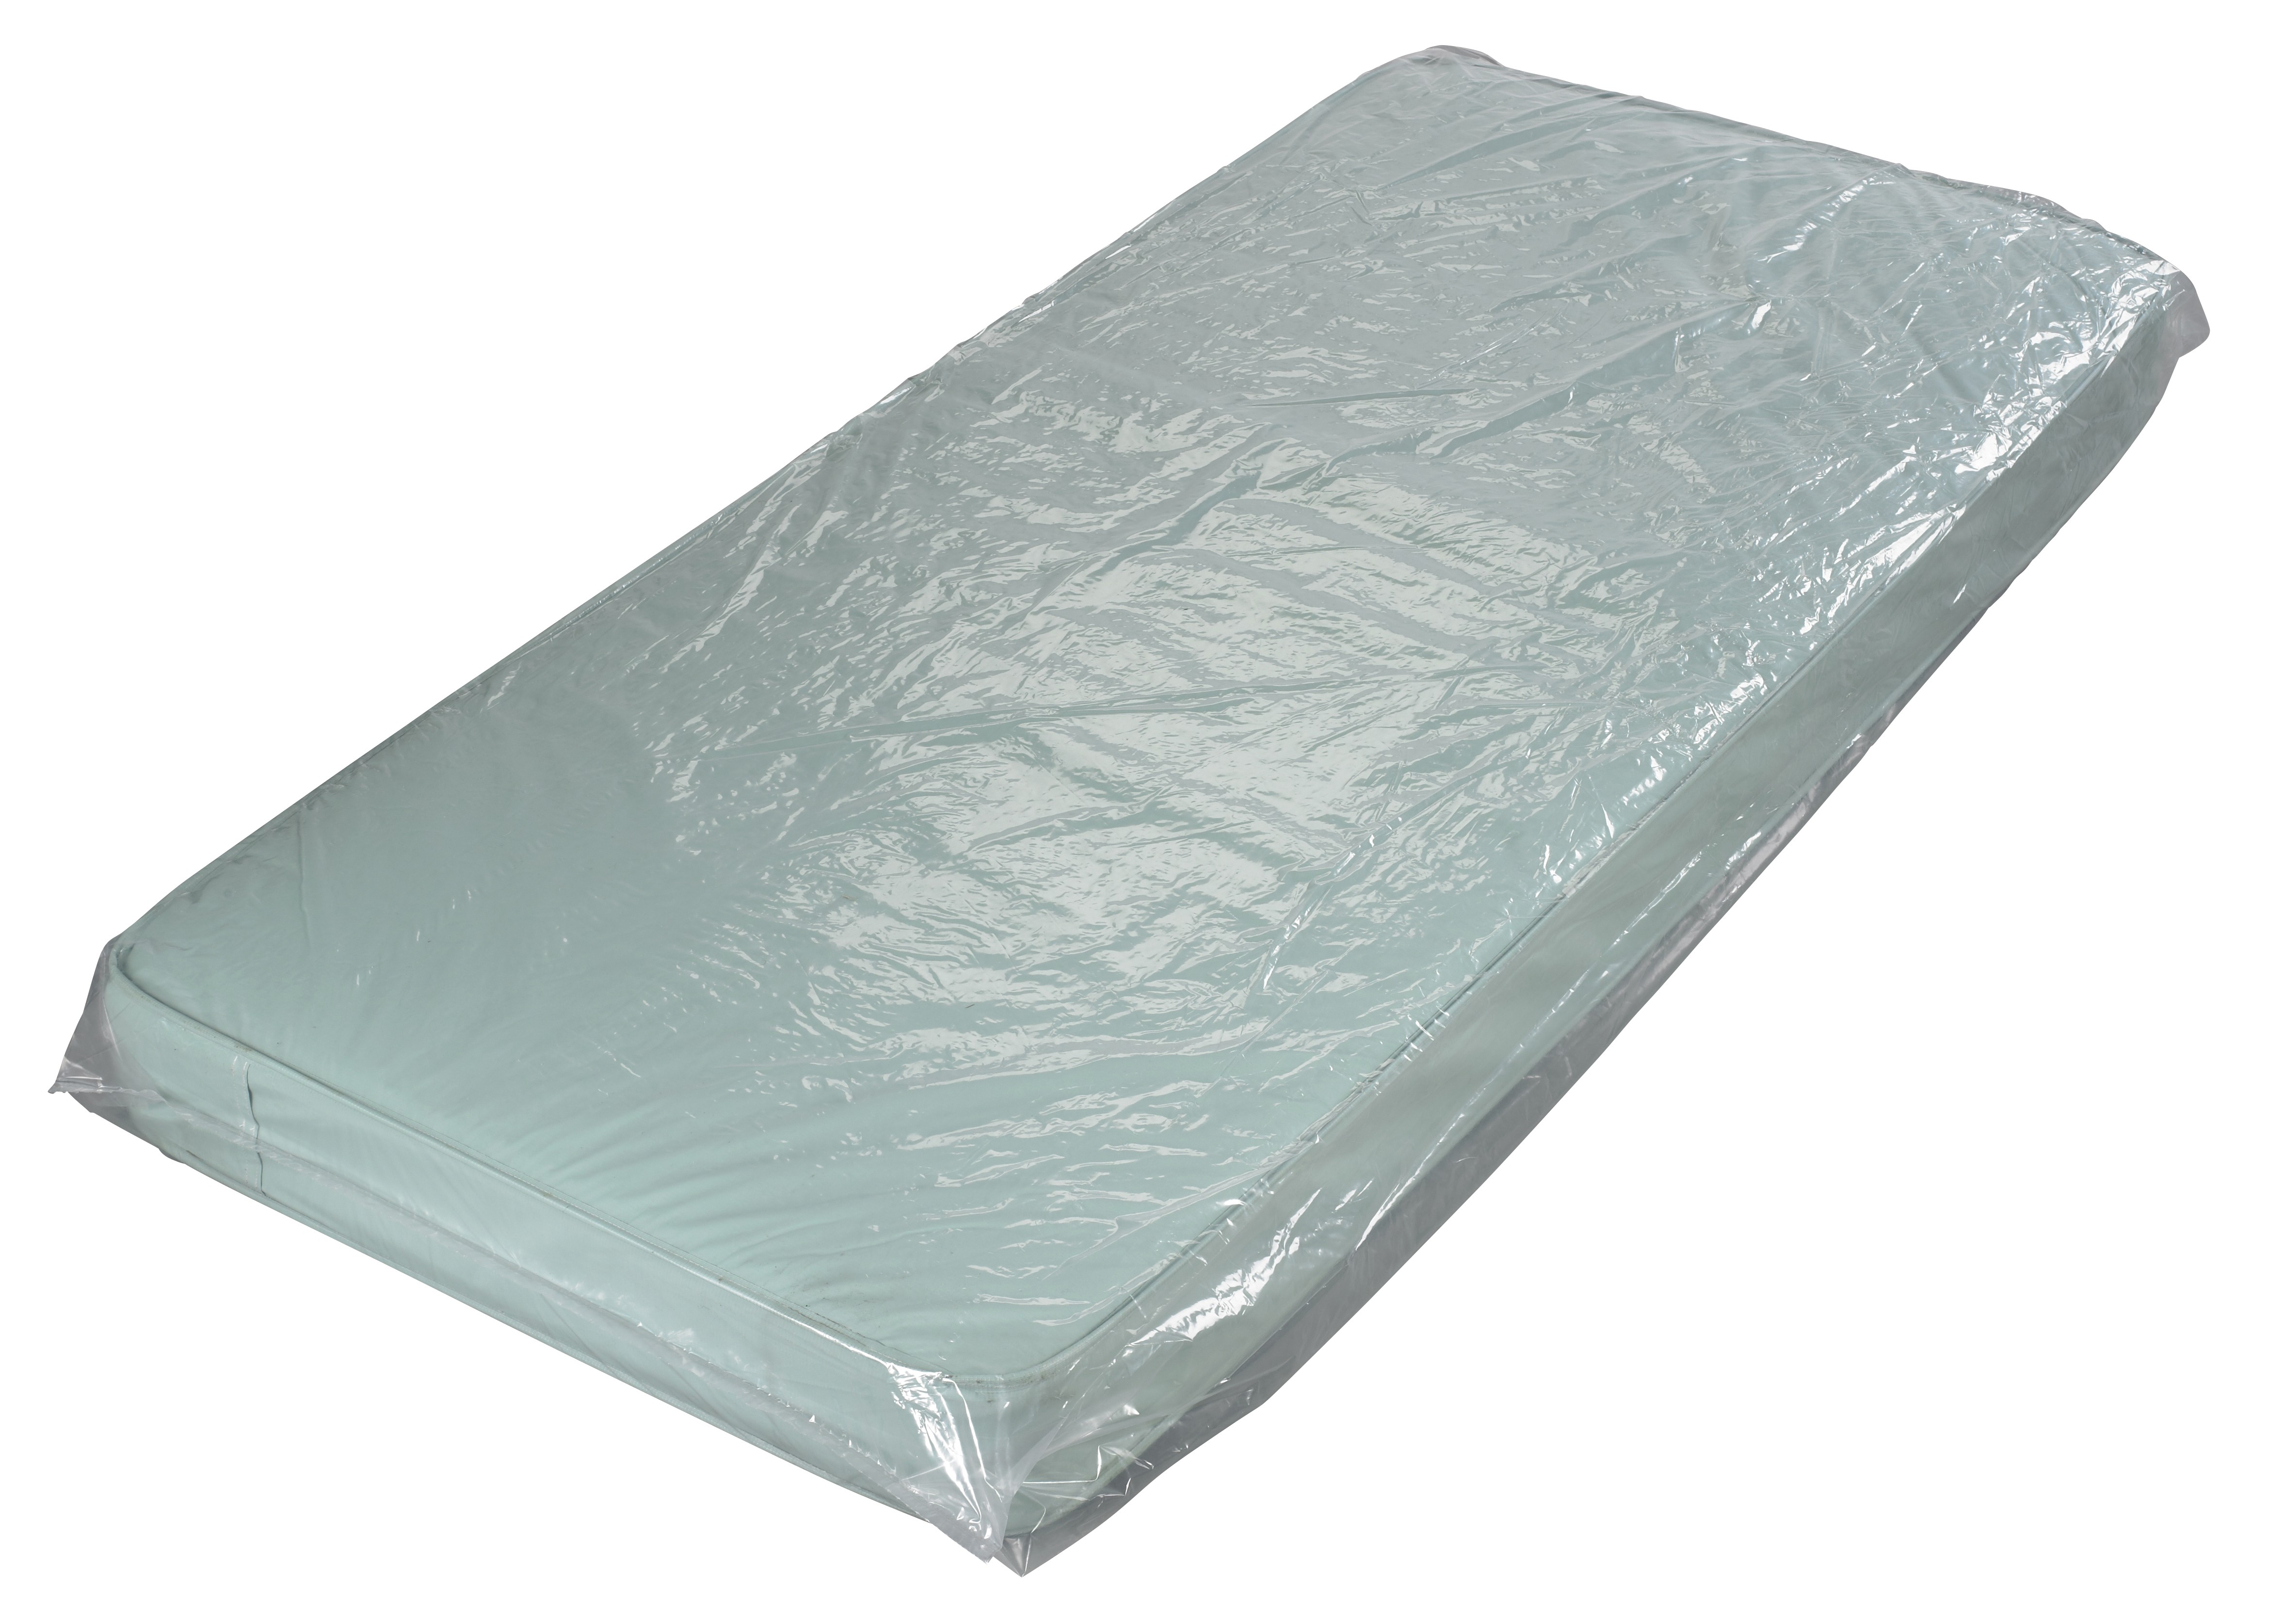 plastic sheet cover for mattress multiple chemical sensitivity